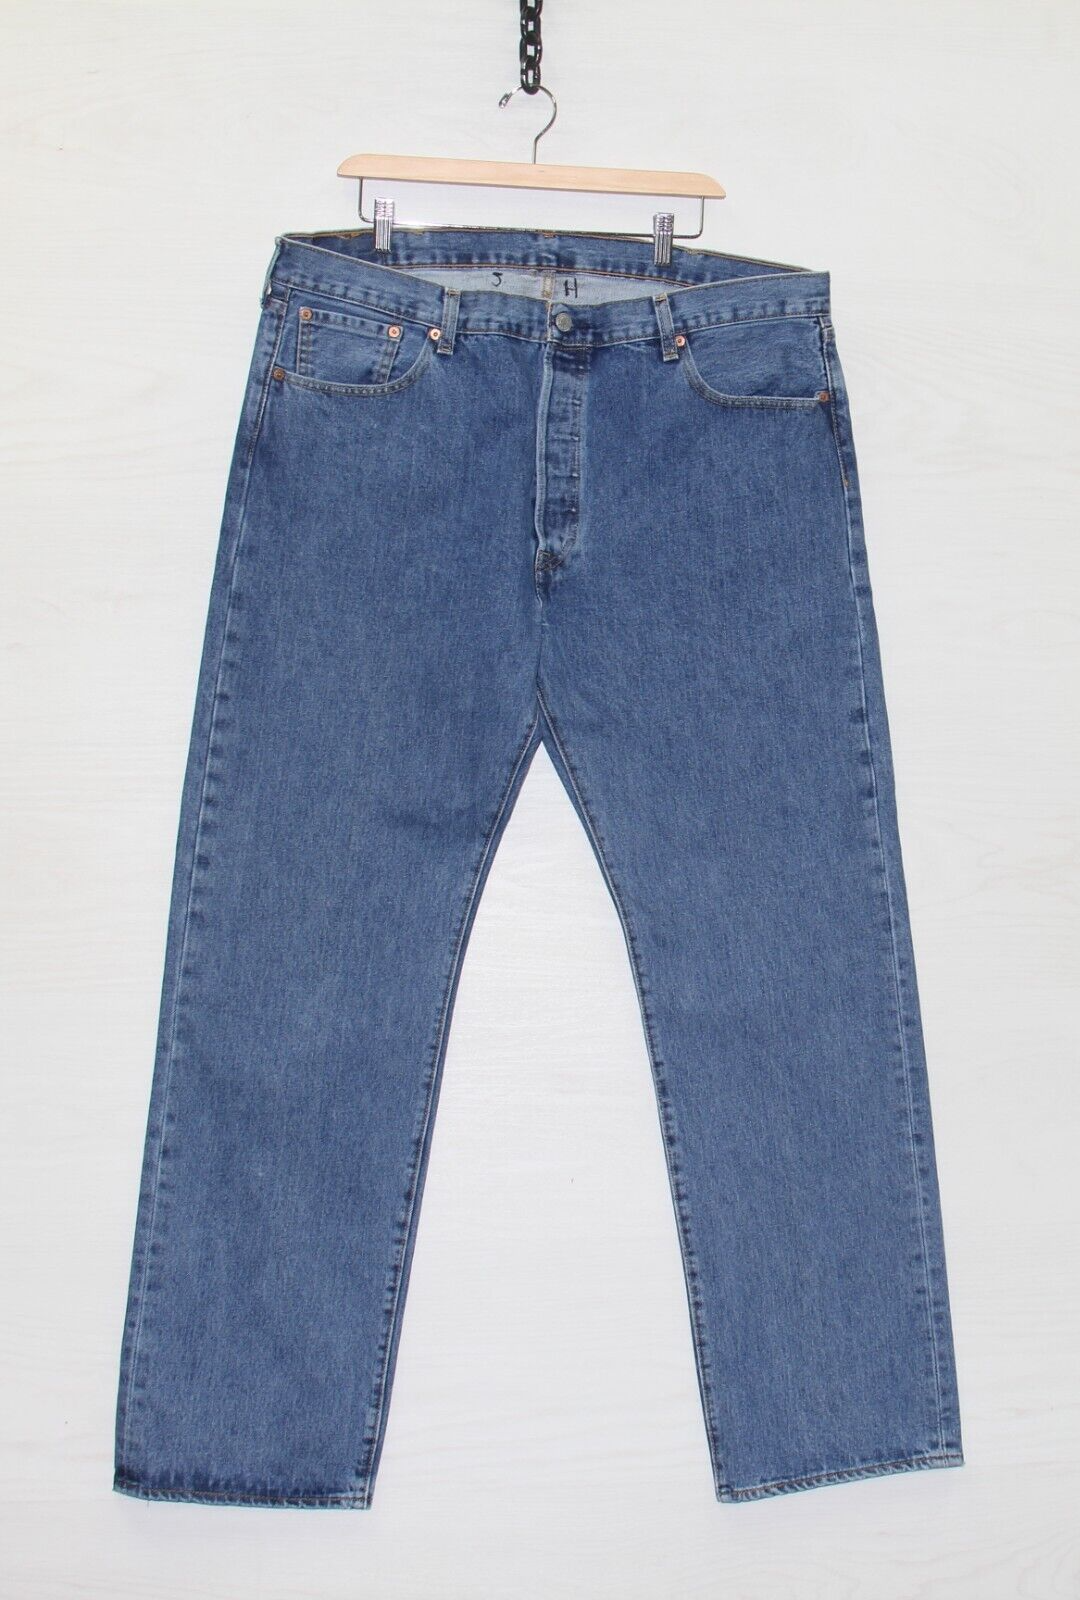 Vintage Levi Strauss & Co 501 Denim Jeans Size 40 X 32 Blue 00501